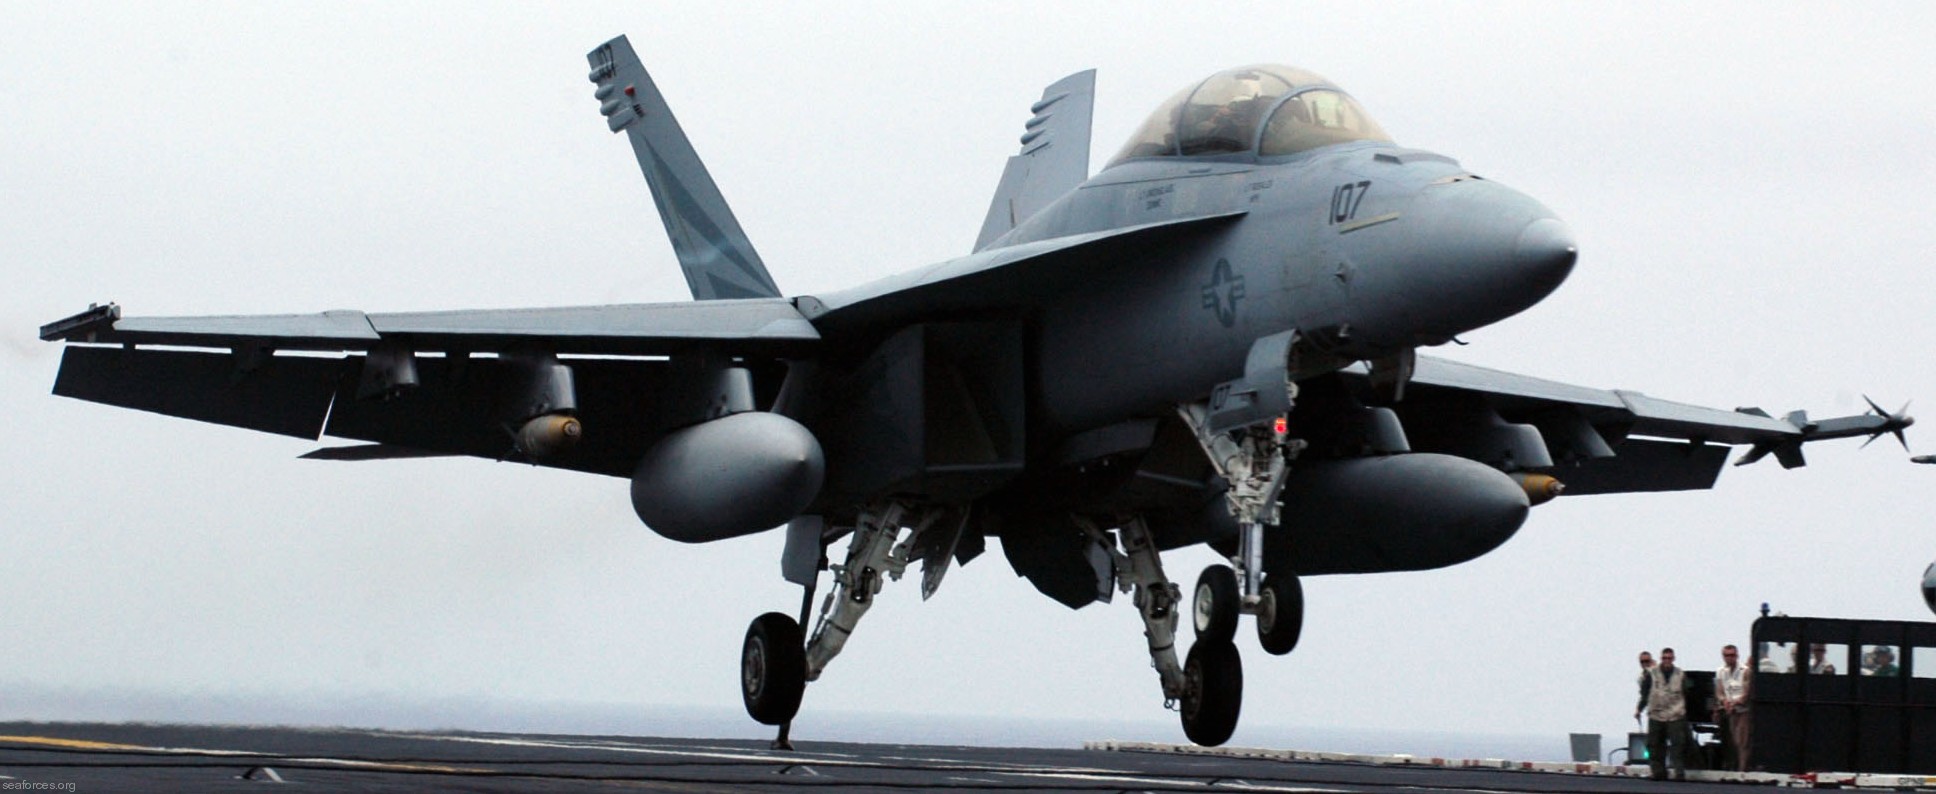 vfa-154 black knights strike fighter squadron navy f/a-18f super hornet carrier air wing cvw-9 uss john c. stennis cvn-70 126